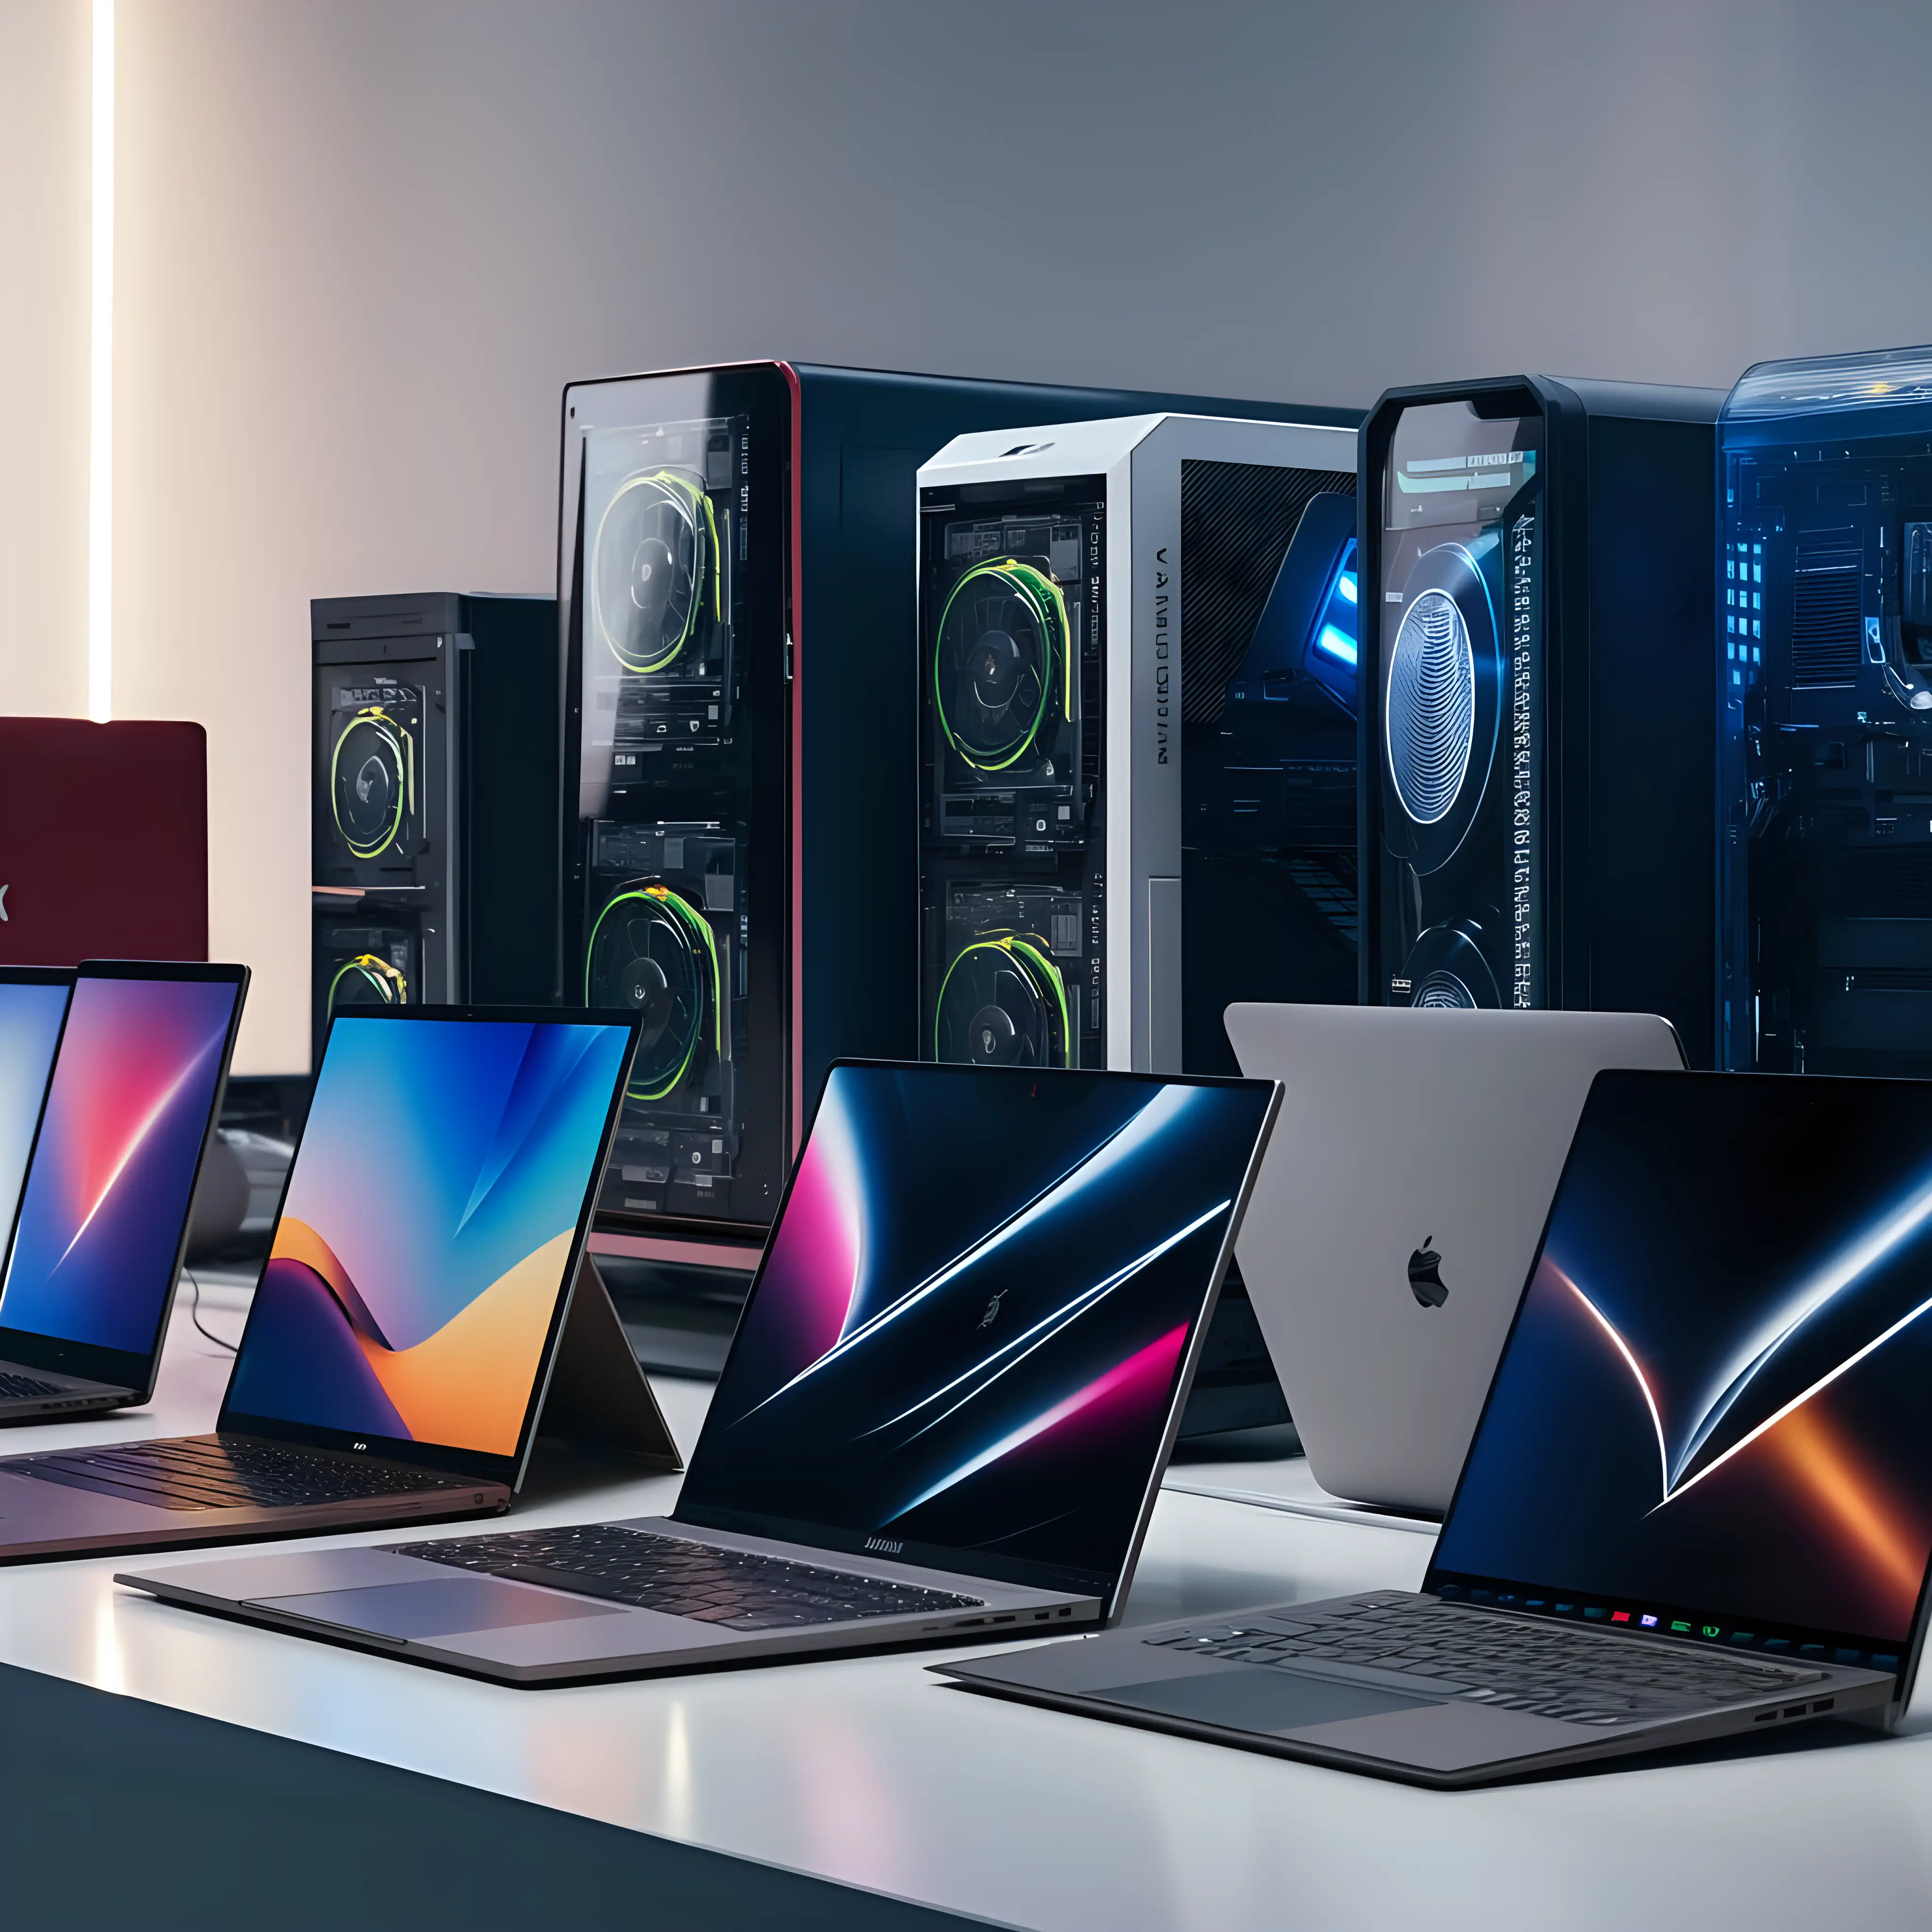 CuttingEdge Laptops and Desktop PCs Showcase in Realistic Photo